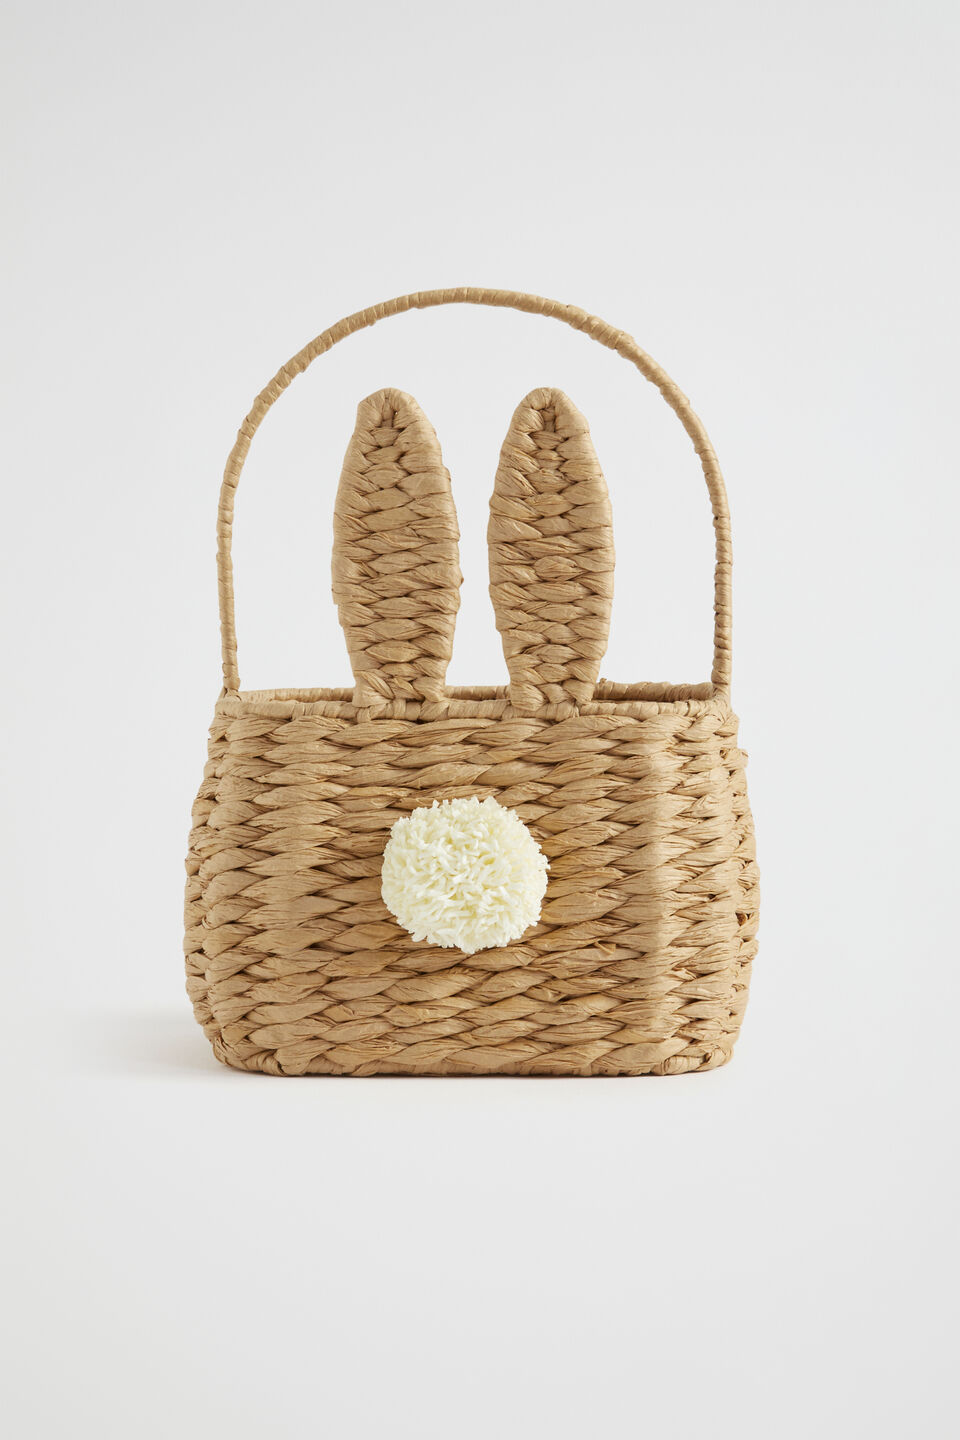 Bunny Basket  Natural